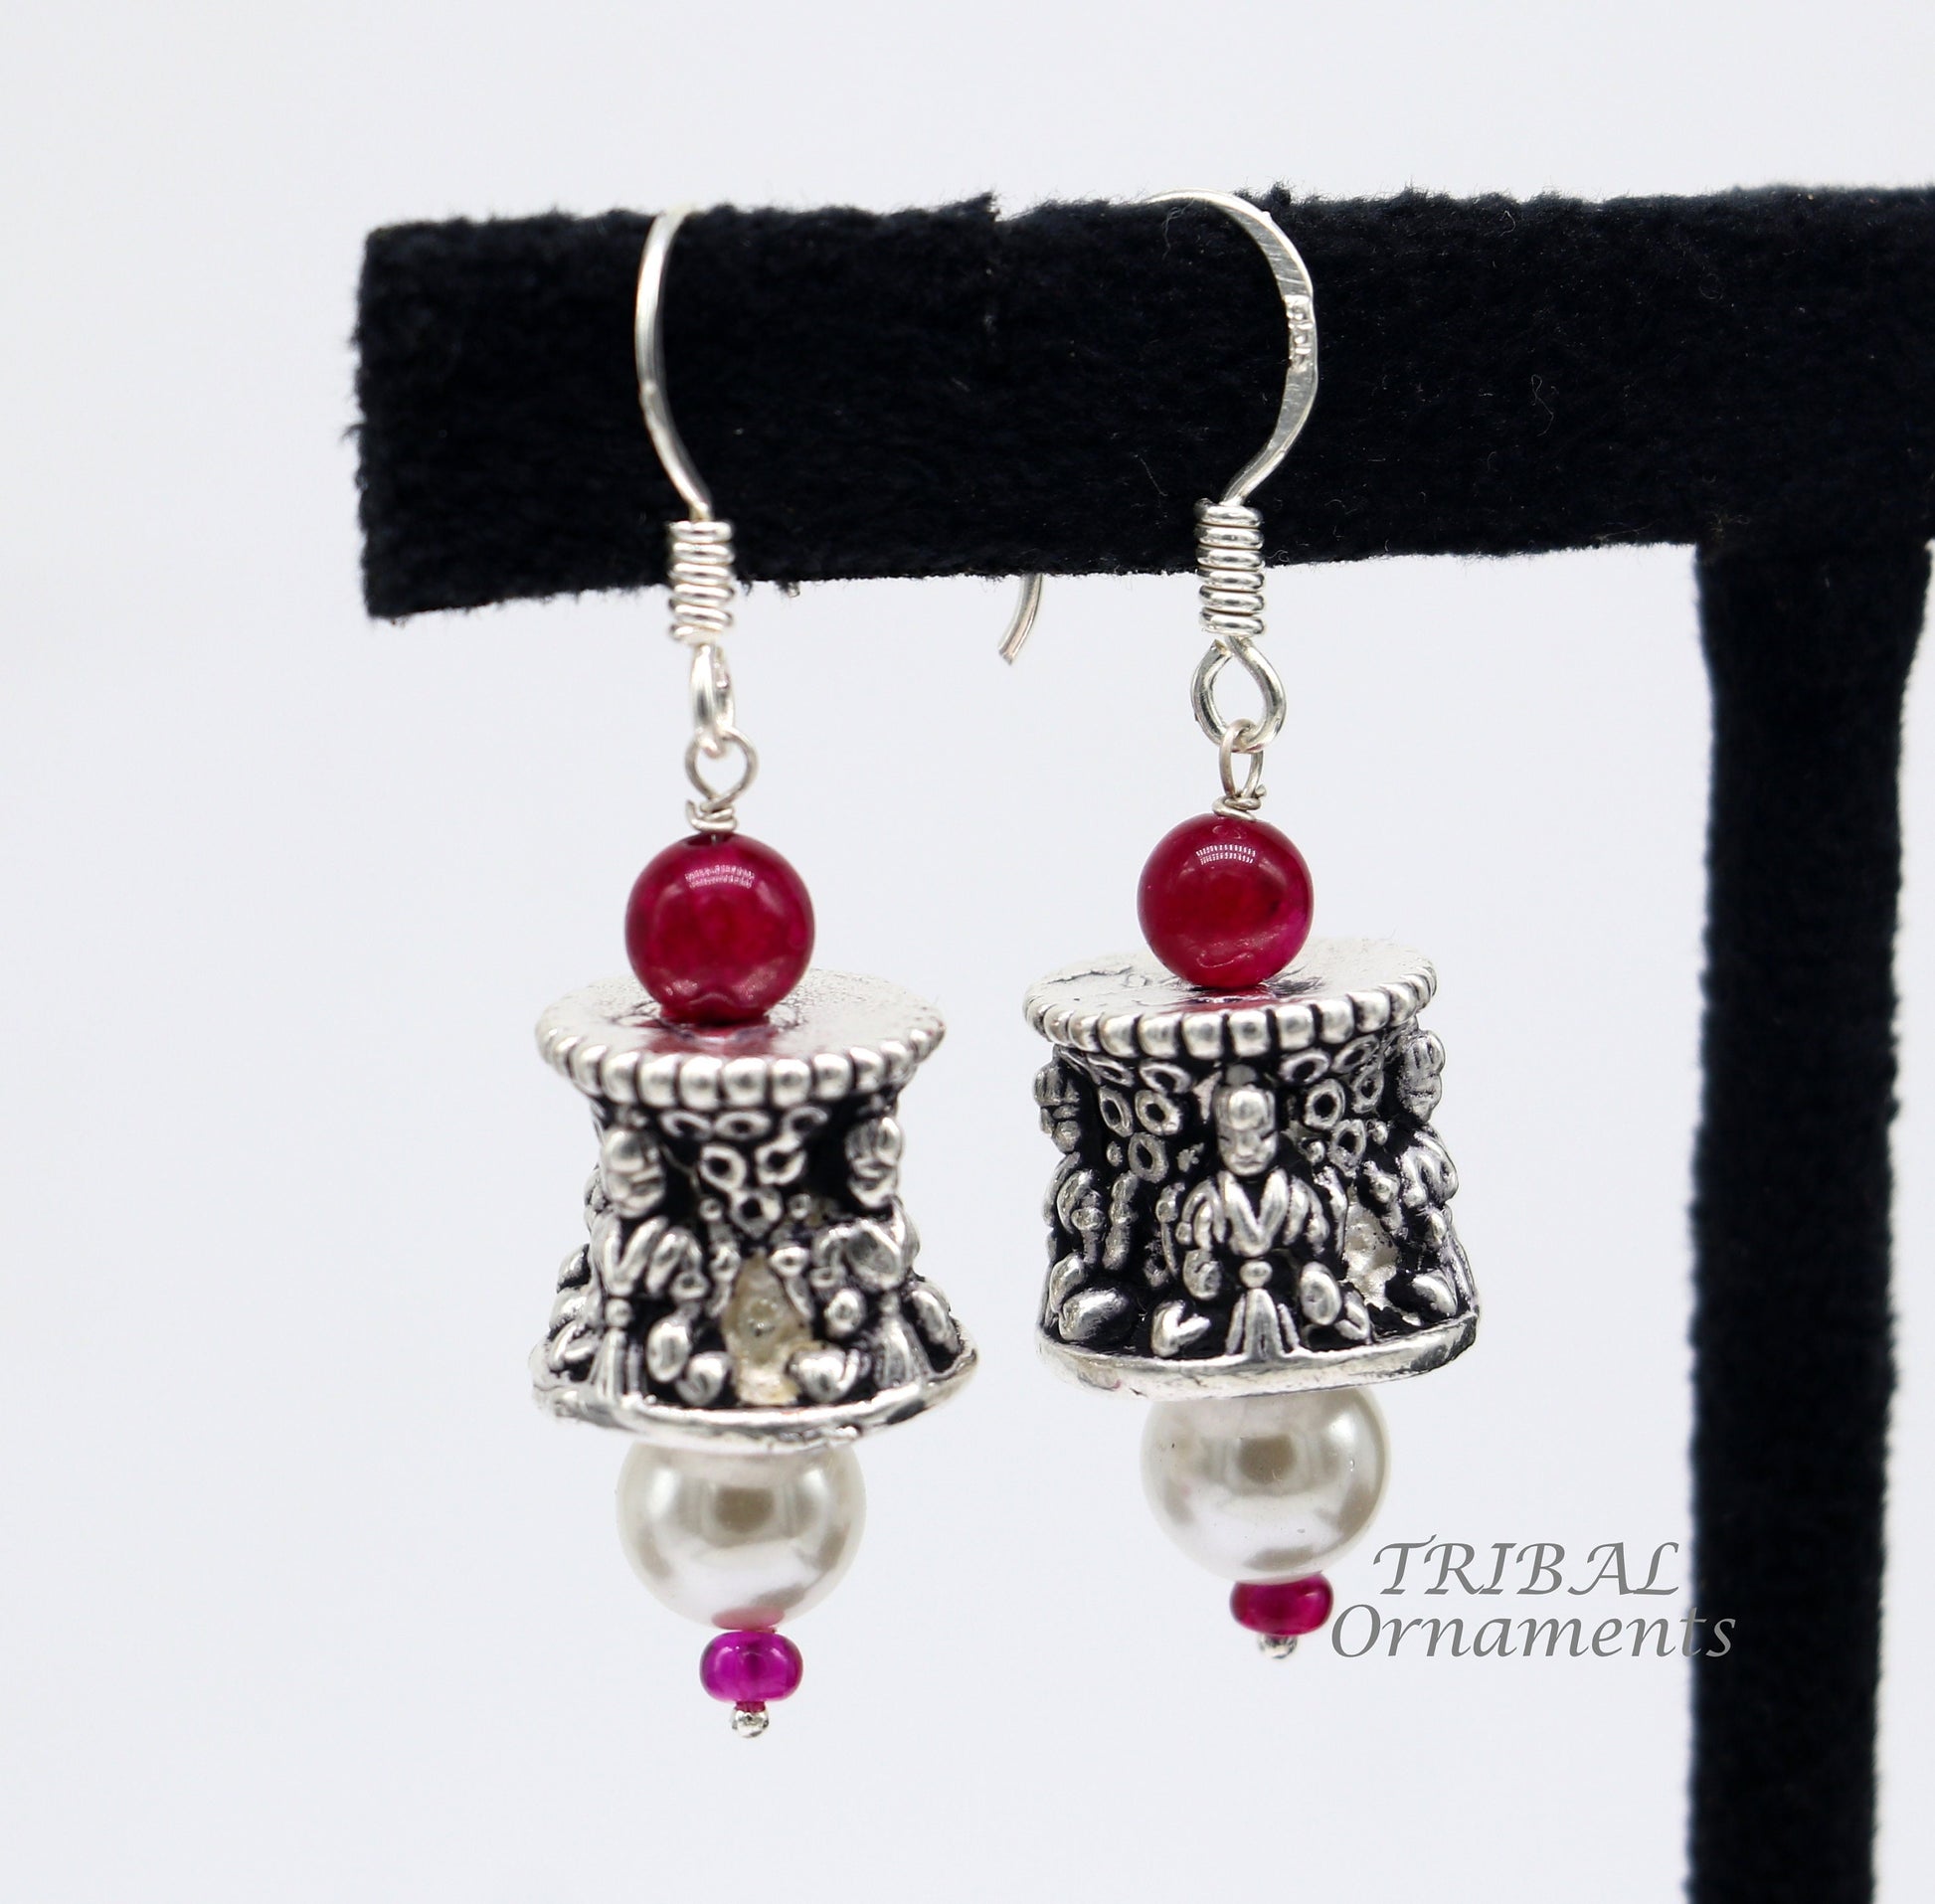 925 sterling silver handmade hook earrings, fabulous hanging pretty bells drop dangle earrings tribal ethnic jewelry from India s1086 - TRIBAL ORNAMENTS